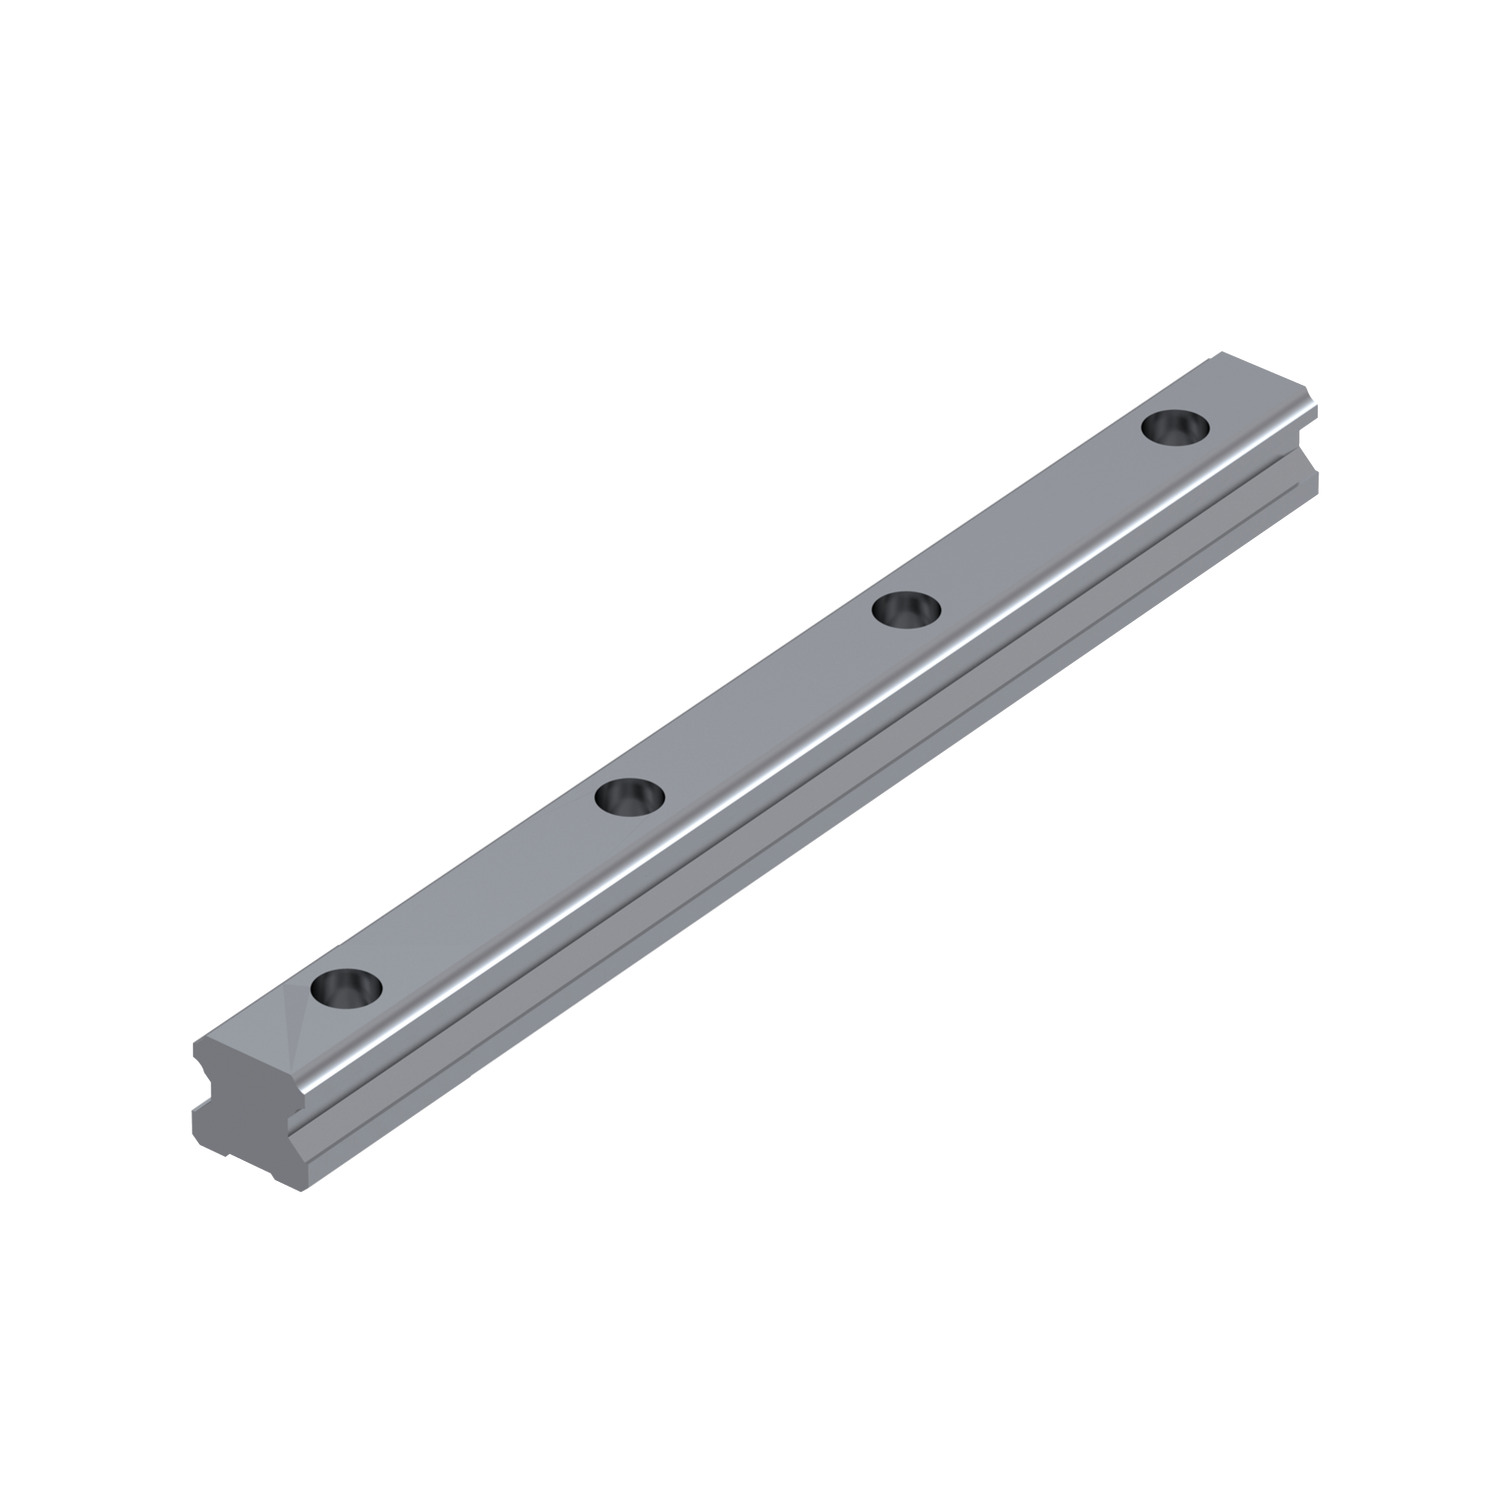 Product L1016.15, 15mm Linear Guide Rail standard / 